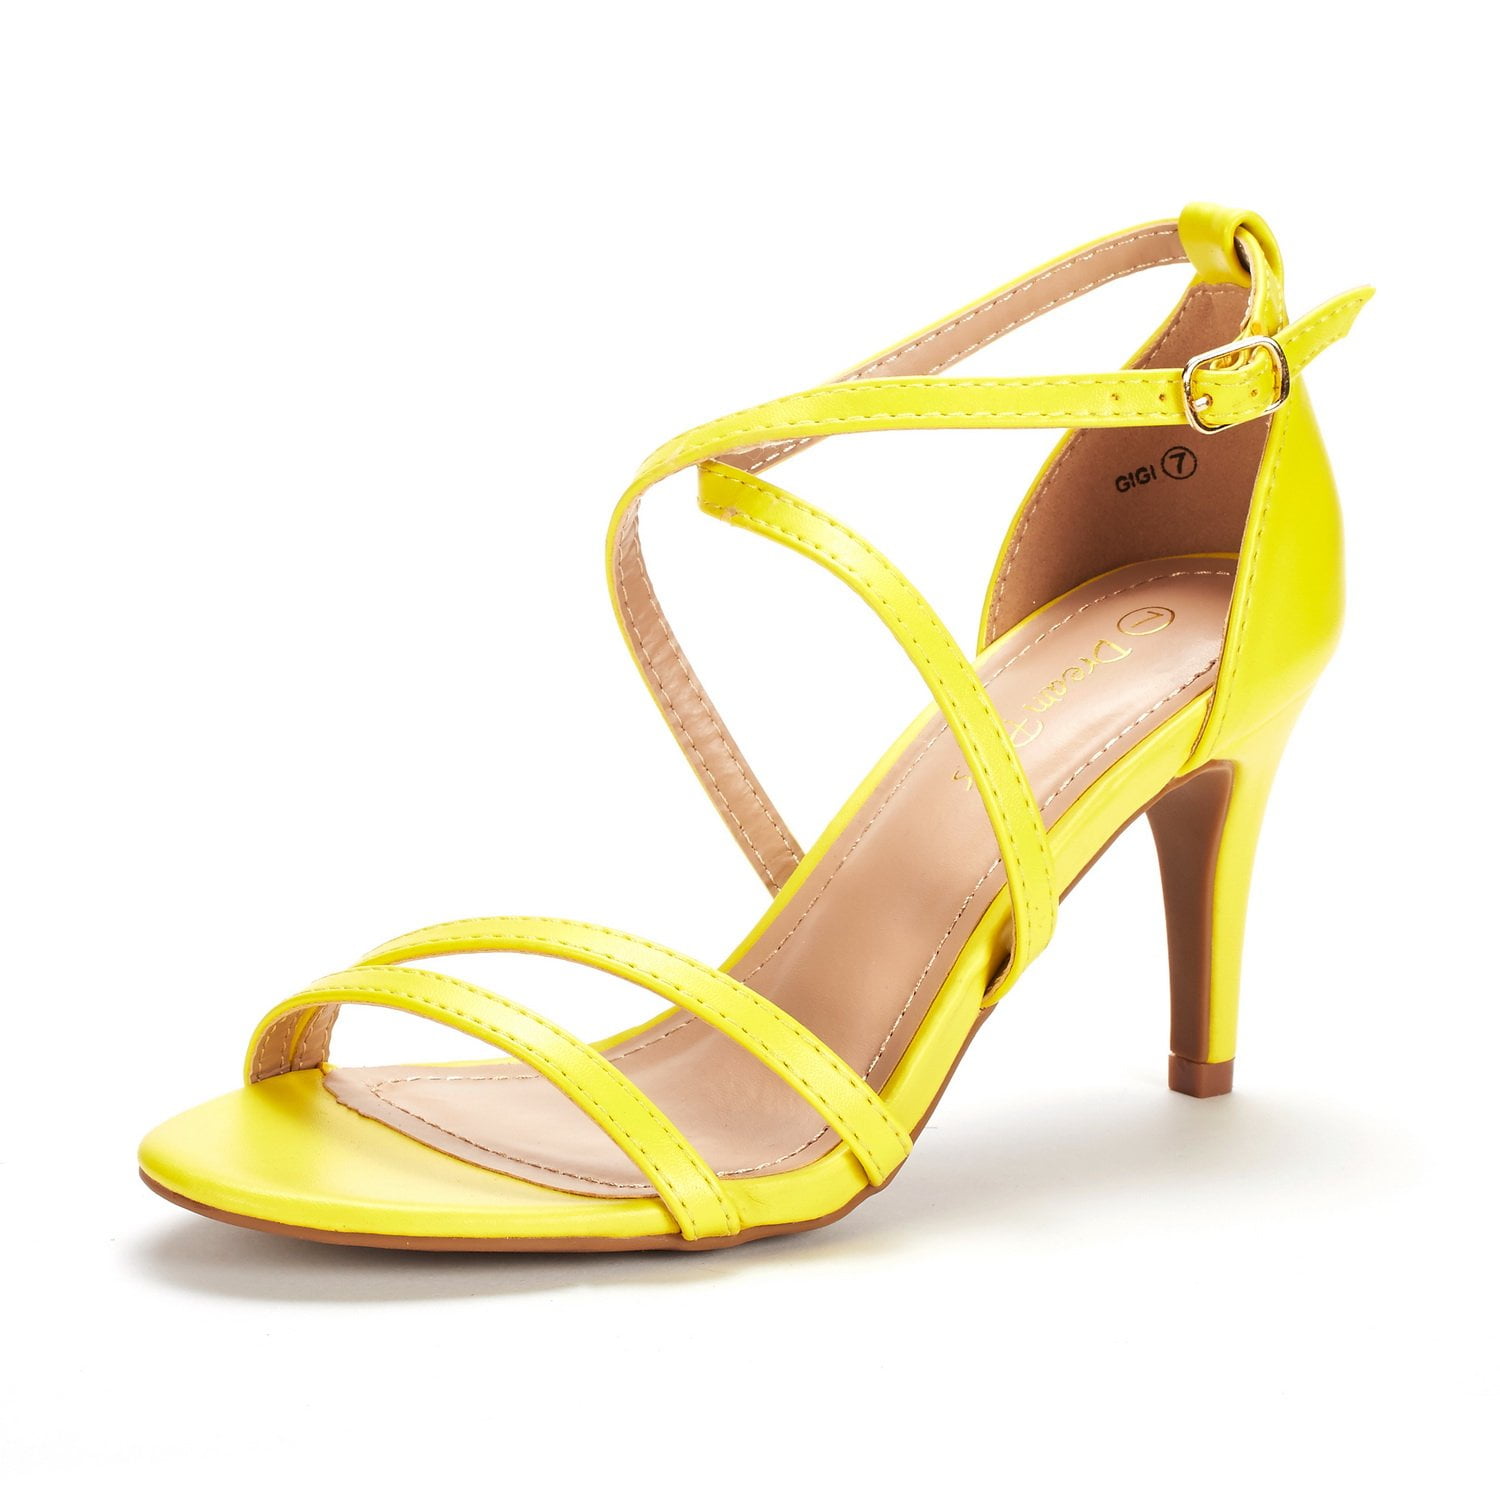 Dream Pairs Women's Ankle Strap High Heel Sandals Dress Shoes Wedding Party Gigi Yellow/Pu Size 6 Walmart.com